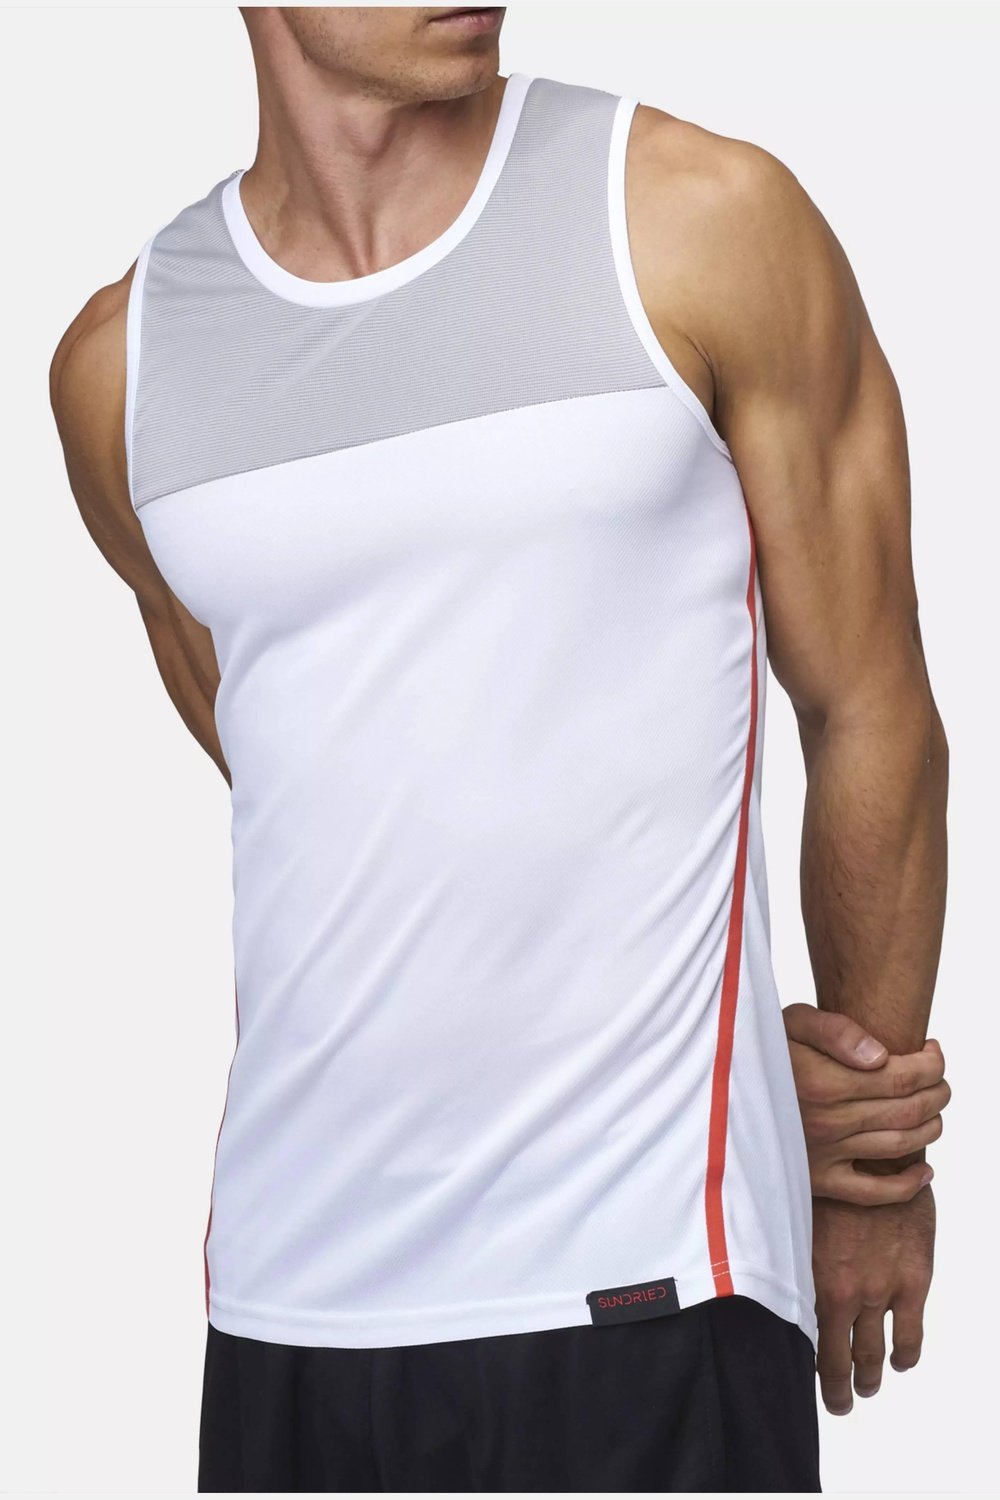 Sundried Dom 2.0 Men's Running Vest T-Shirt Activewear